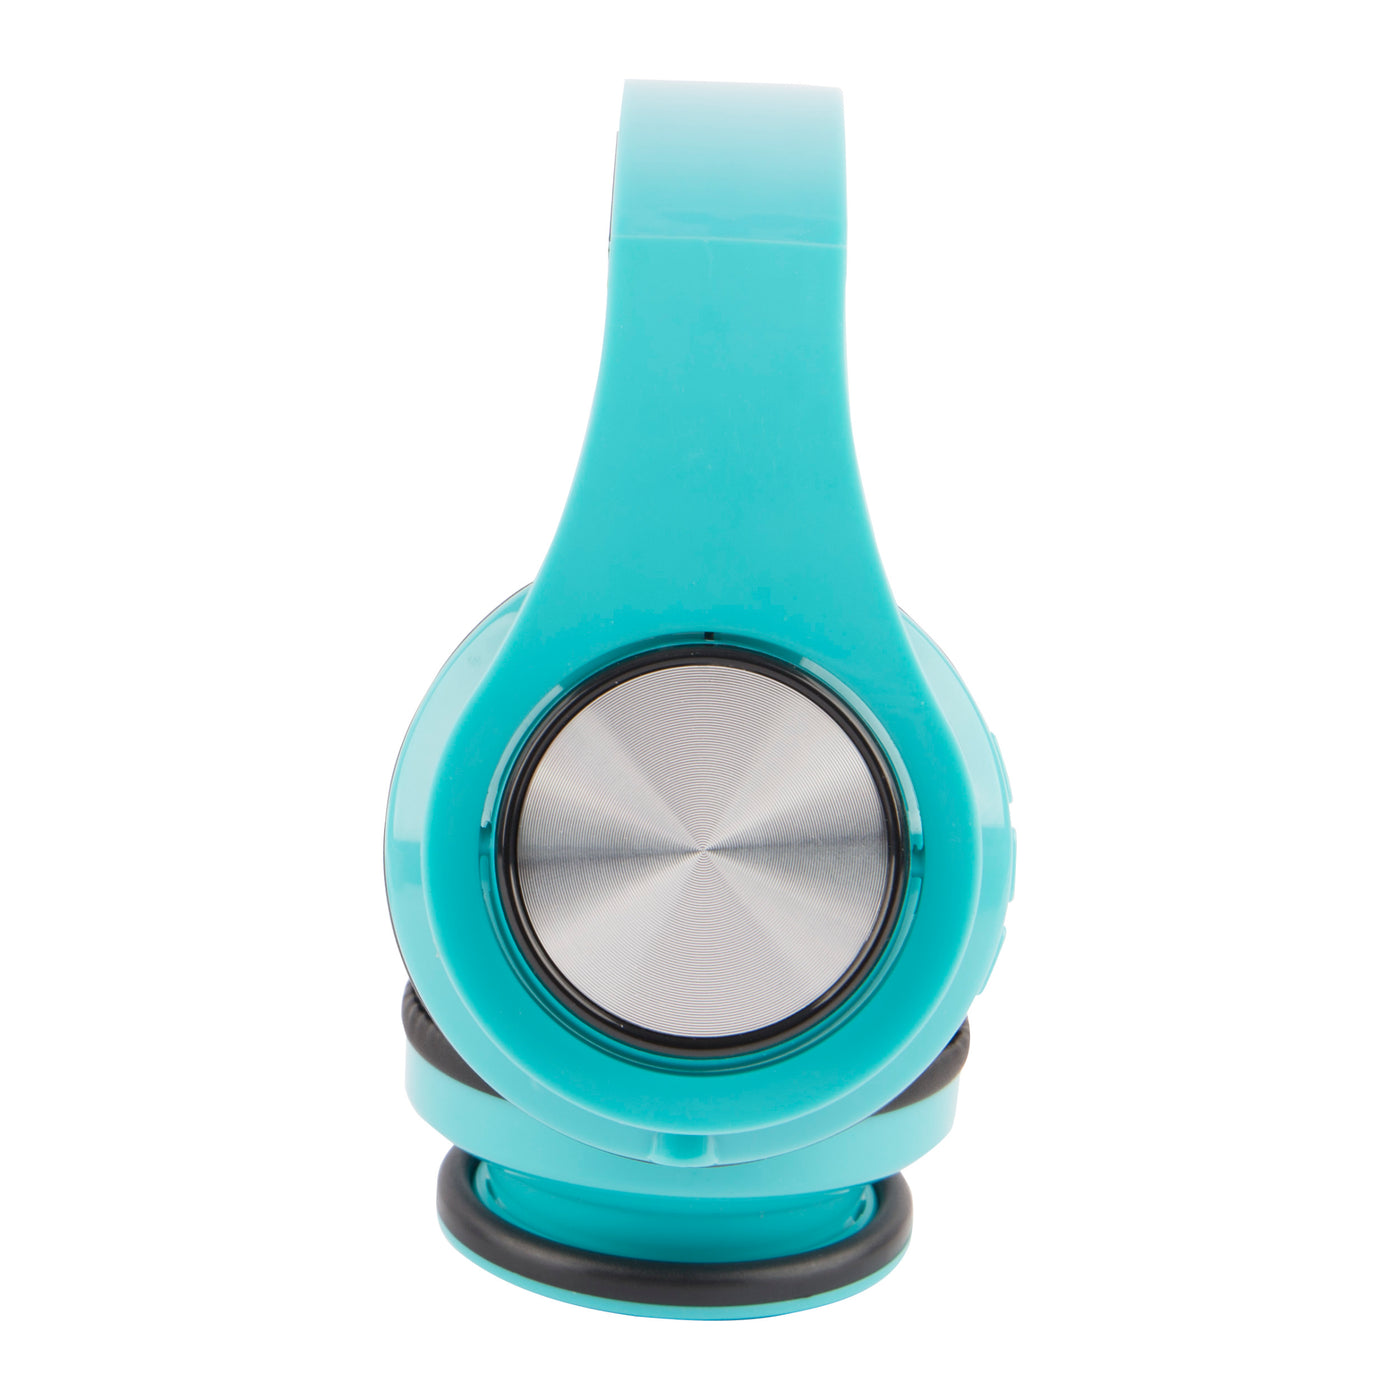 Vivitar Bluetooth Smart Watch